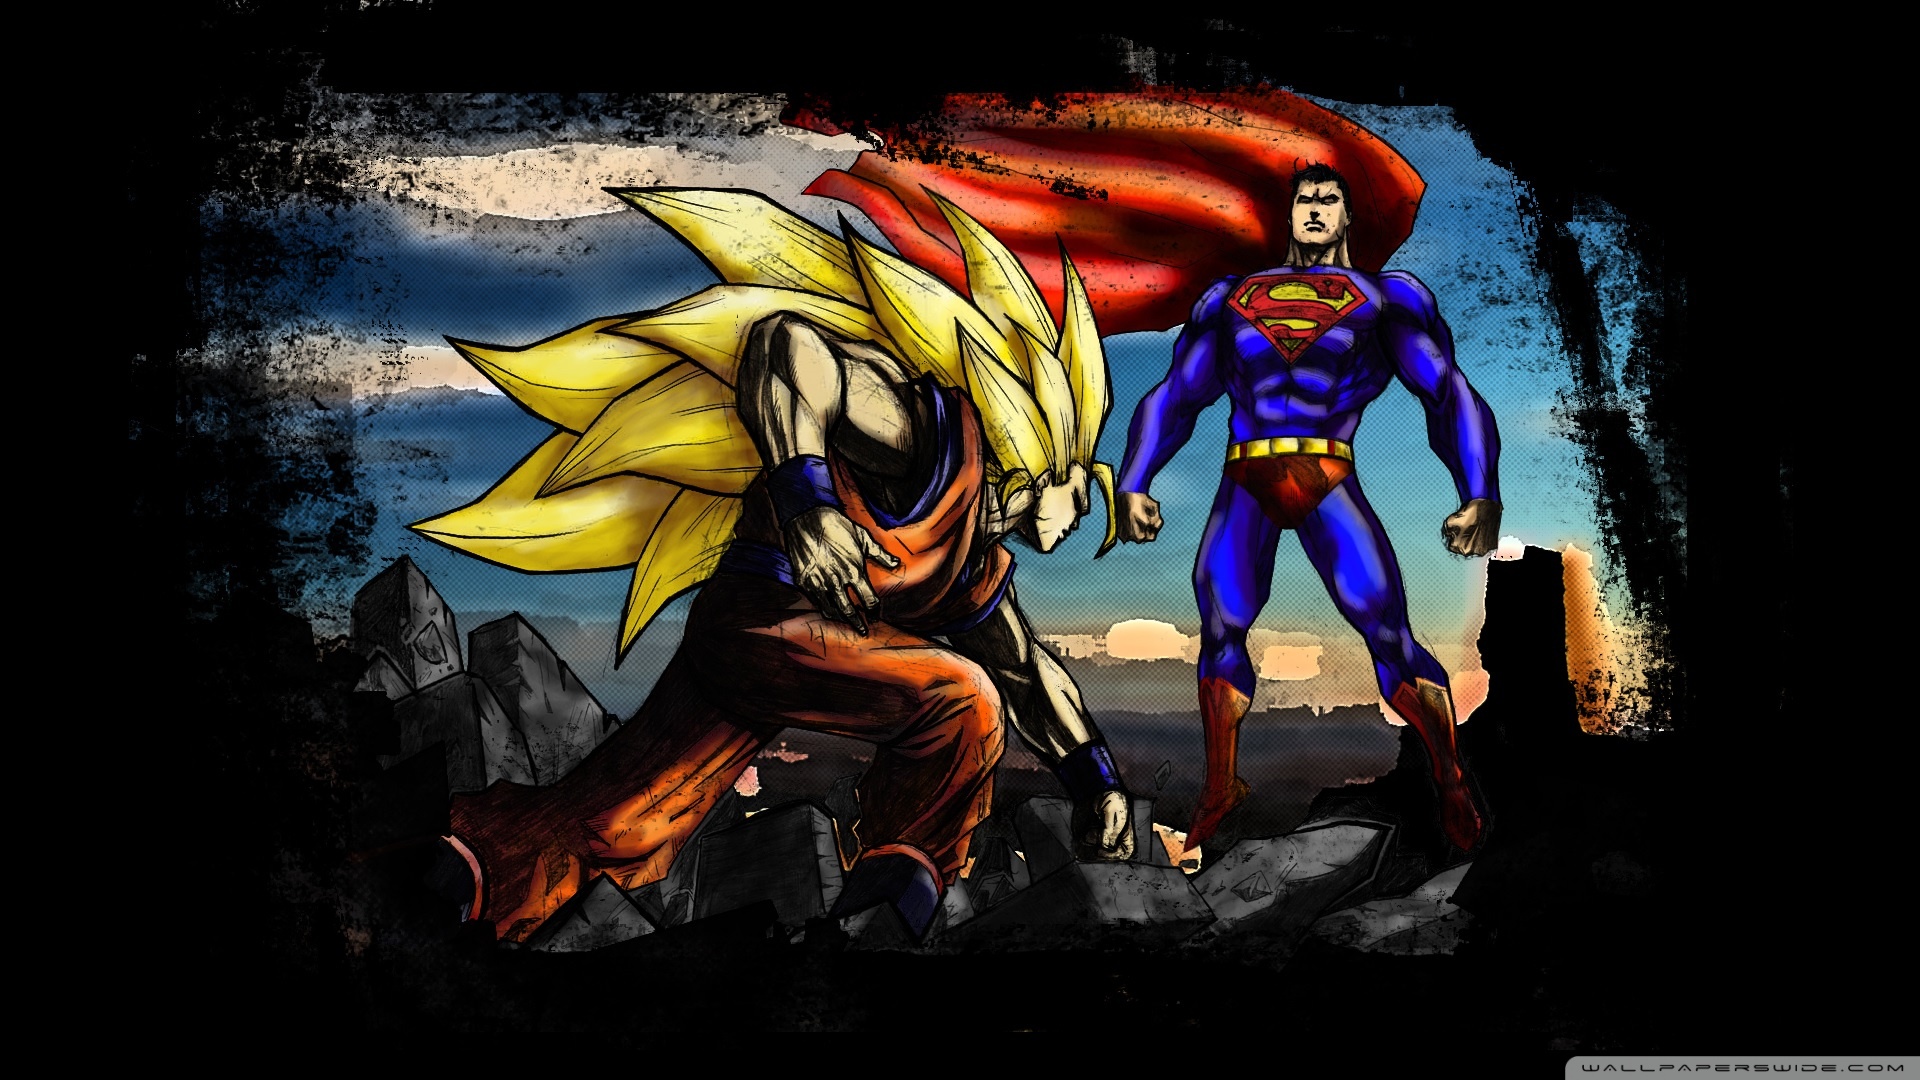 Superman VS Goku Wallpaper Full HD 1920x1080 - Free wallpaper